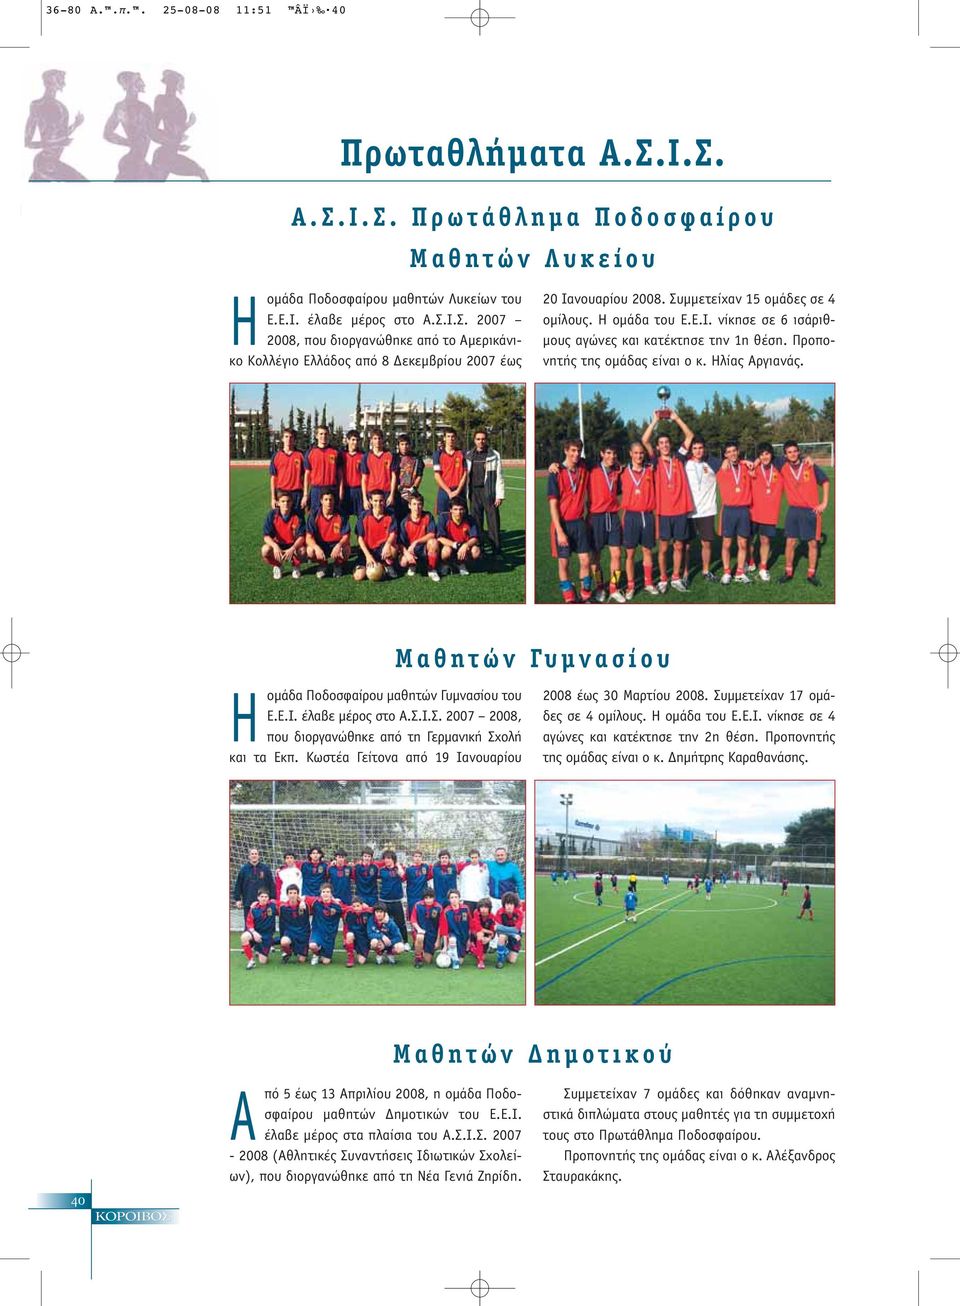 H ομάδα Ποδοσφαίρου μαθητών Γυμνασίου του Ε.Ε.Ι. έλαβε μέρος στο Α.Σ.Ι.Σ. 2007 2008, που διοργανώθηκε από τη Γερμανική Σχολή και τα Εκπ.